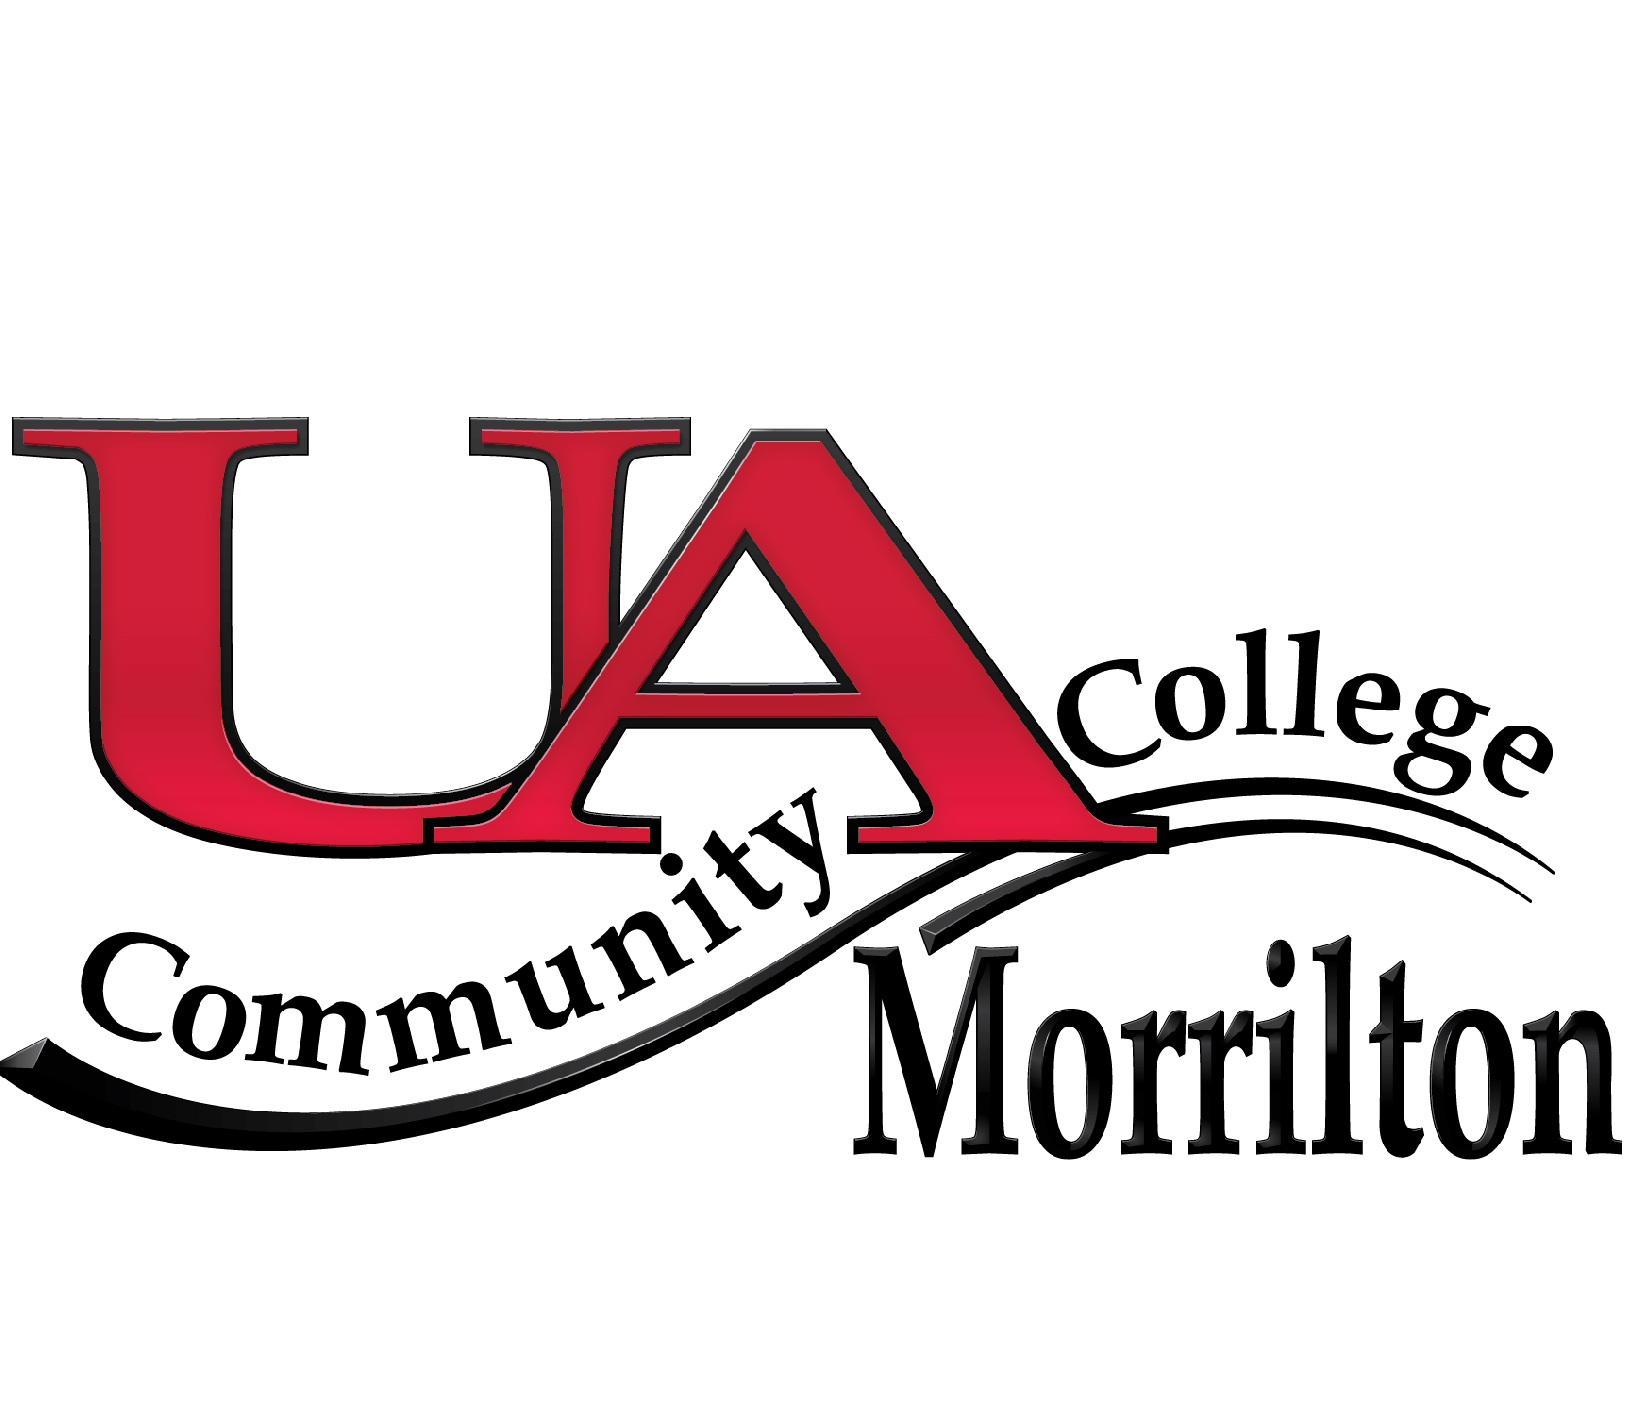 Community College at Morrilton logo